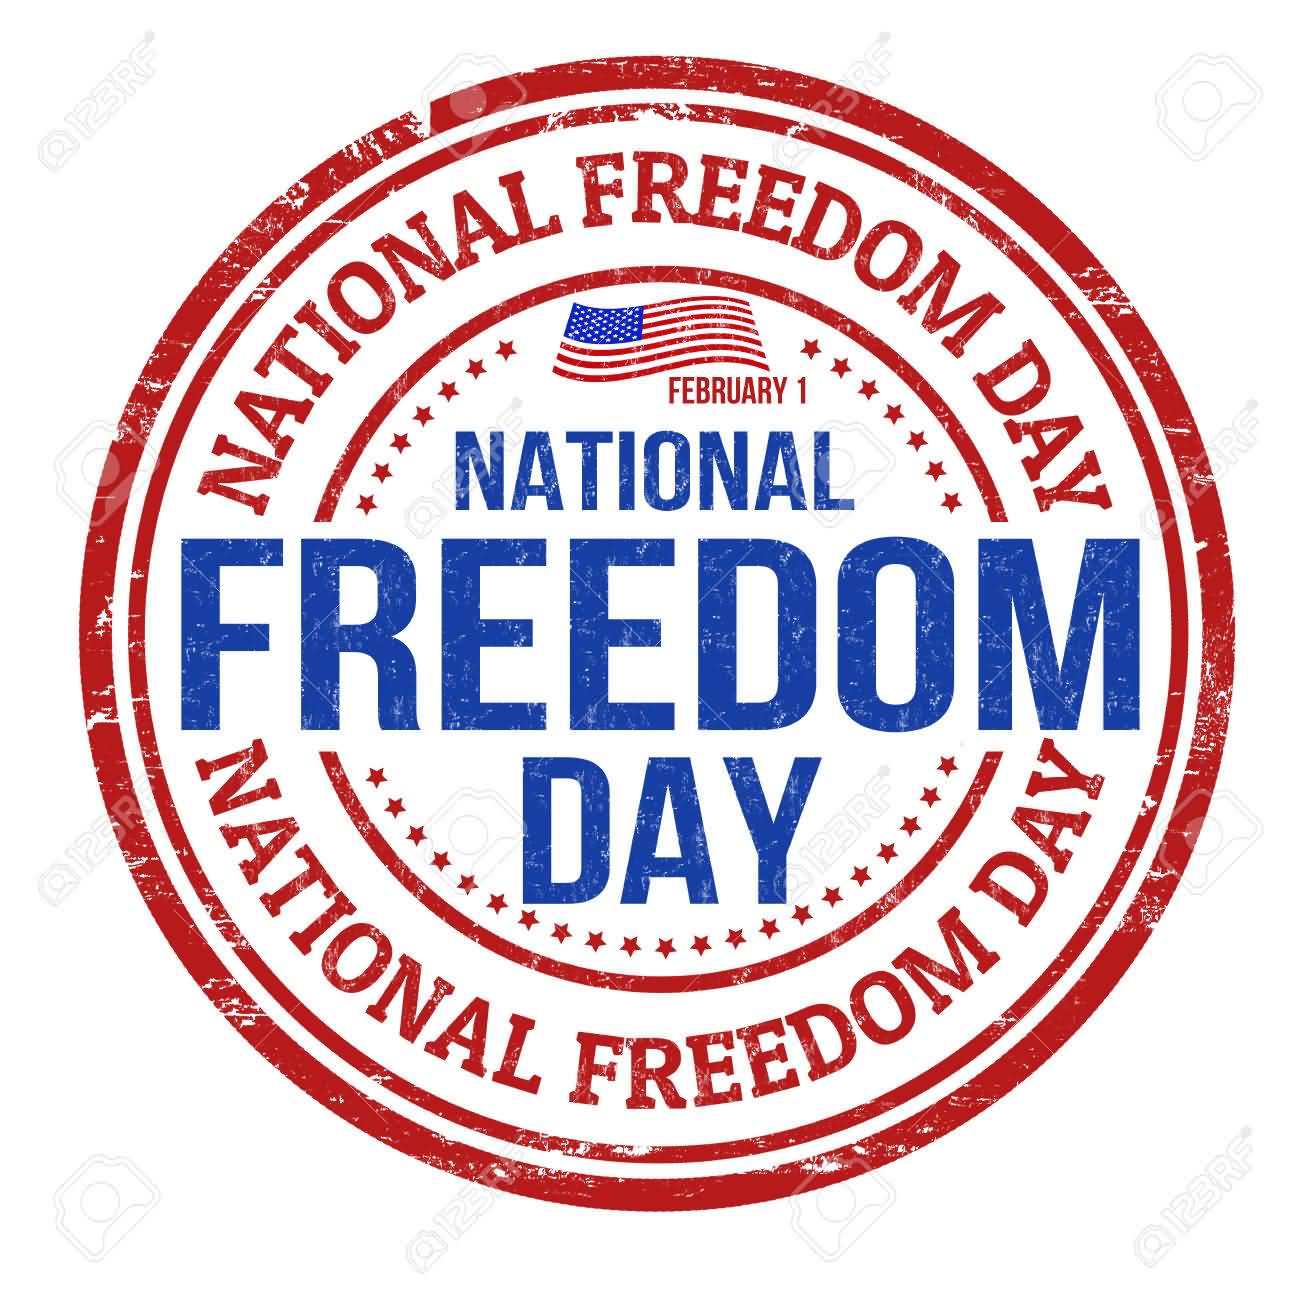 National Freedom Day February 1 Grunge Stamp